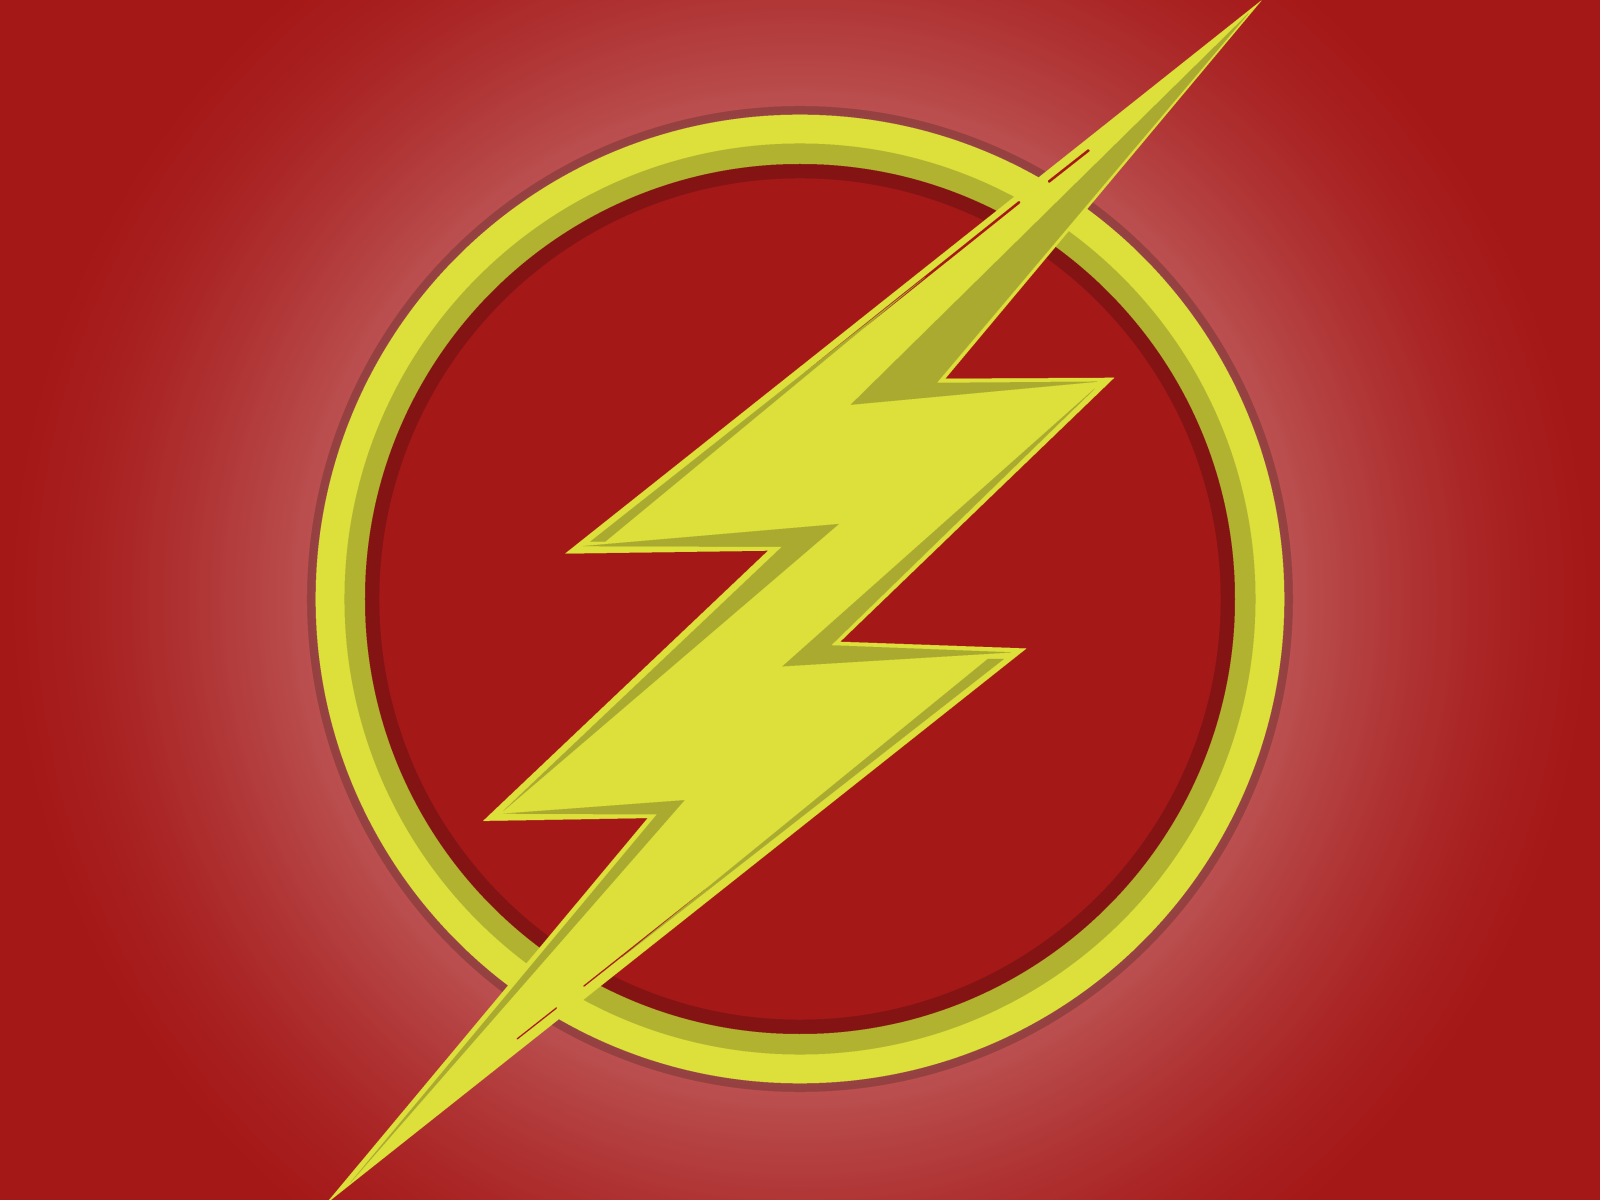 The Flash Logo - Vector Art by Nanda Gopal on Dribbble